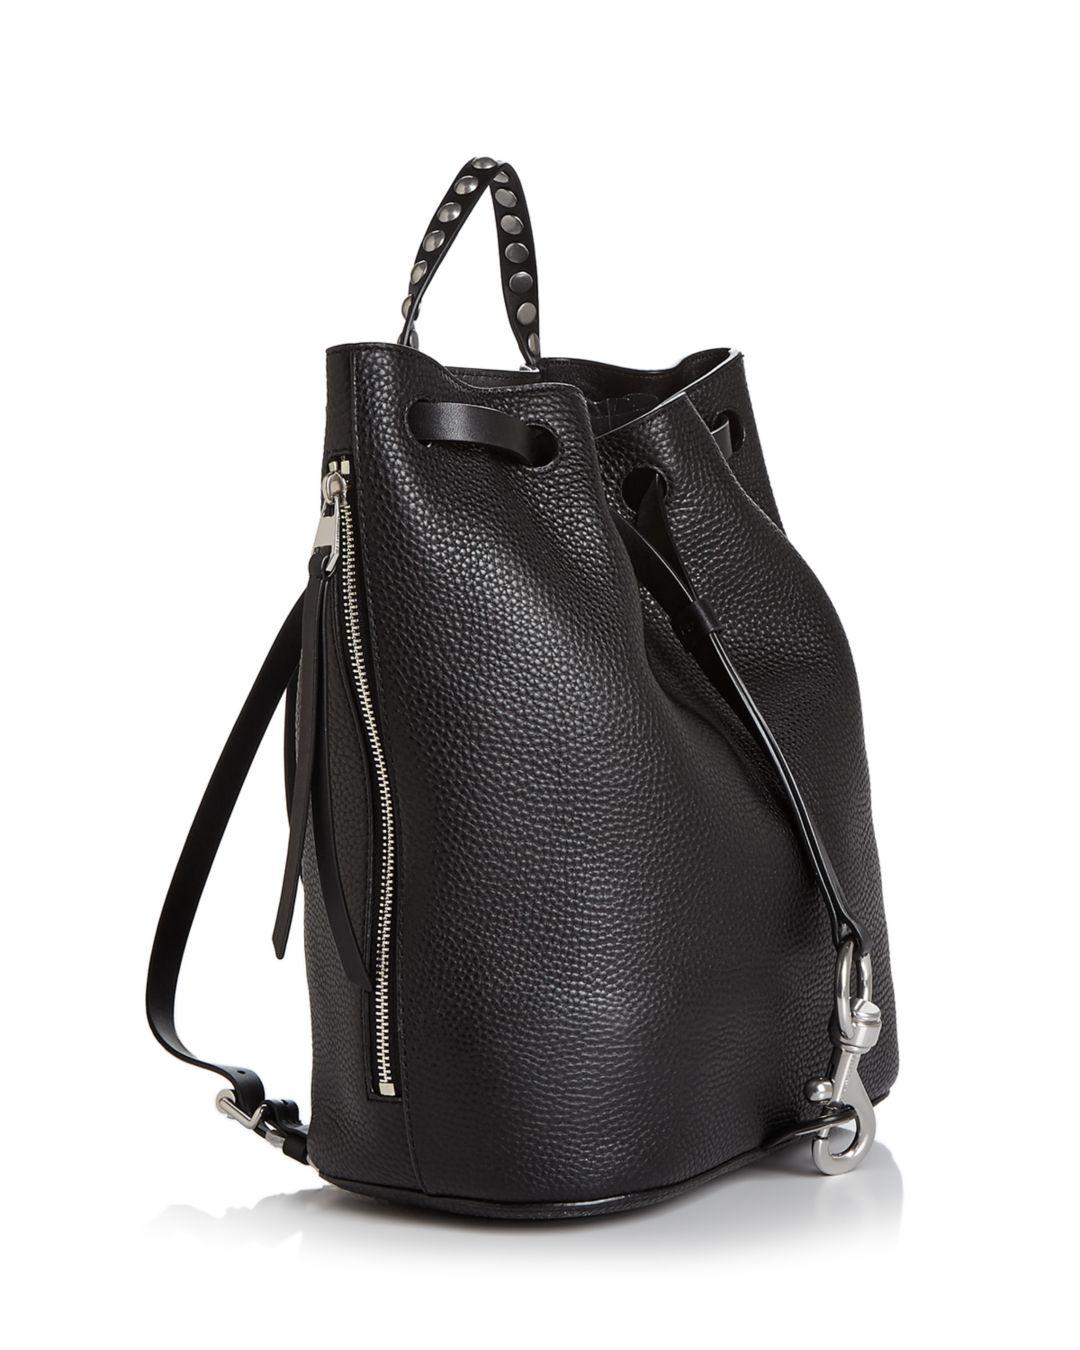 Rebecca Minkoff Leather Blythe Backpack in Black/Silver (Black) | Lyst